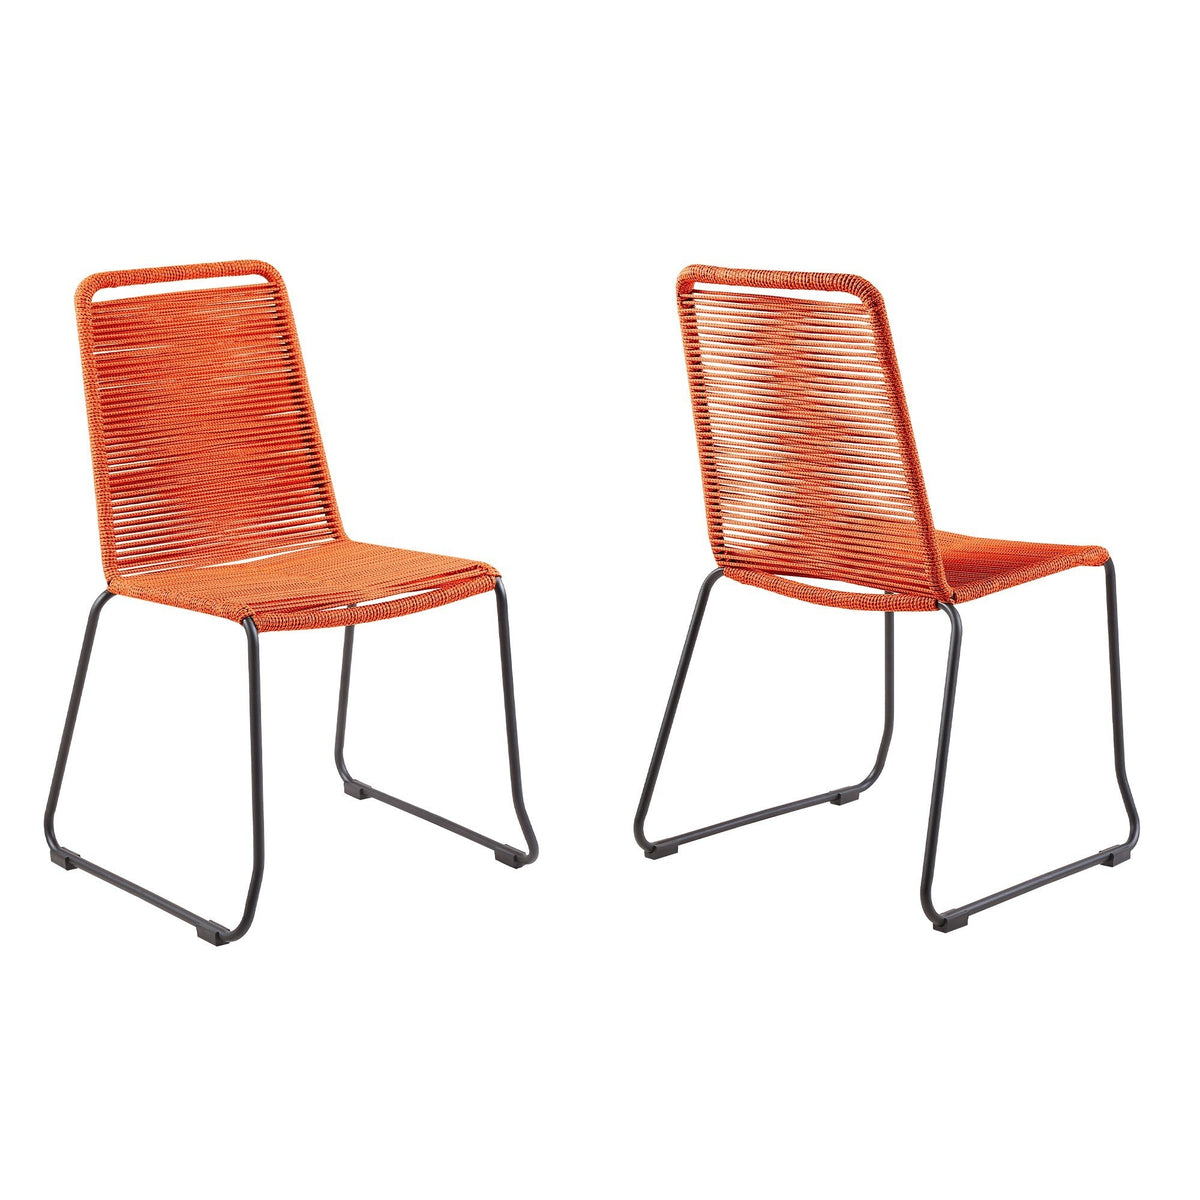 18.5 Inches Fishbone Weaved Metal Dining Chair, Set of 2, Orange - BM236720